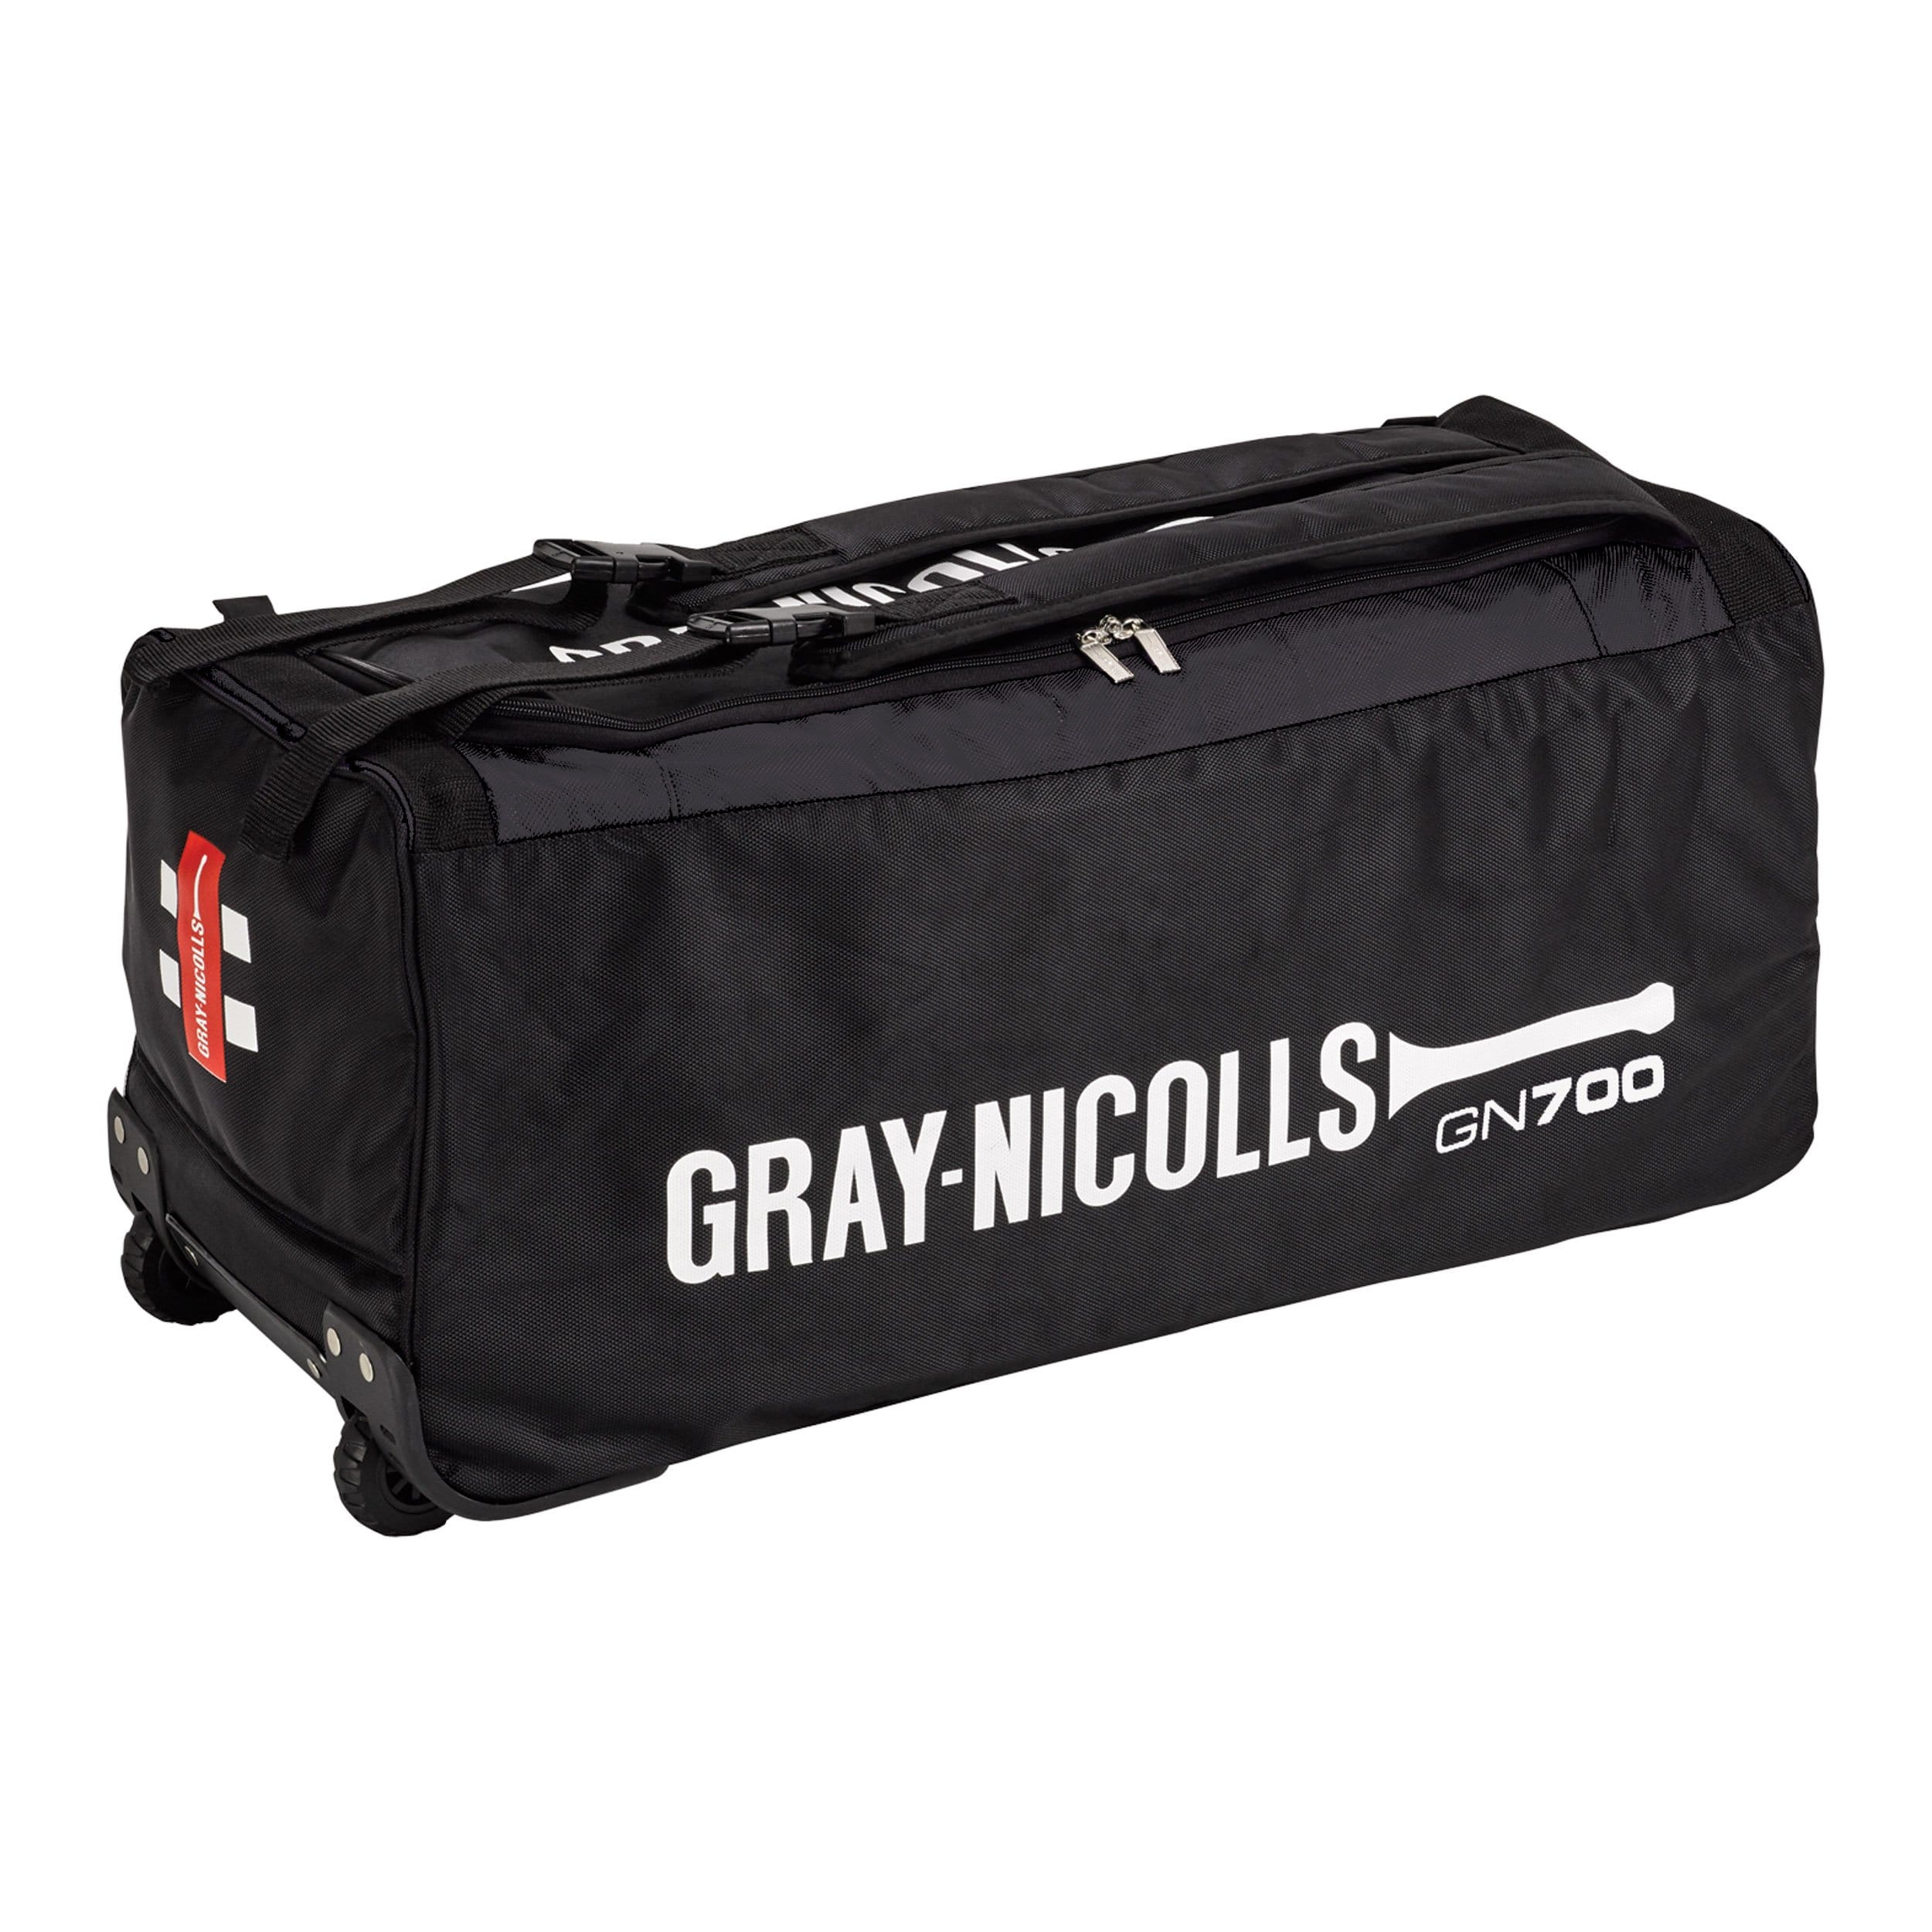 Gray Nicolls Cricket Bags Black Gray Nicolls 700 Wheelie Cricket Bag